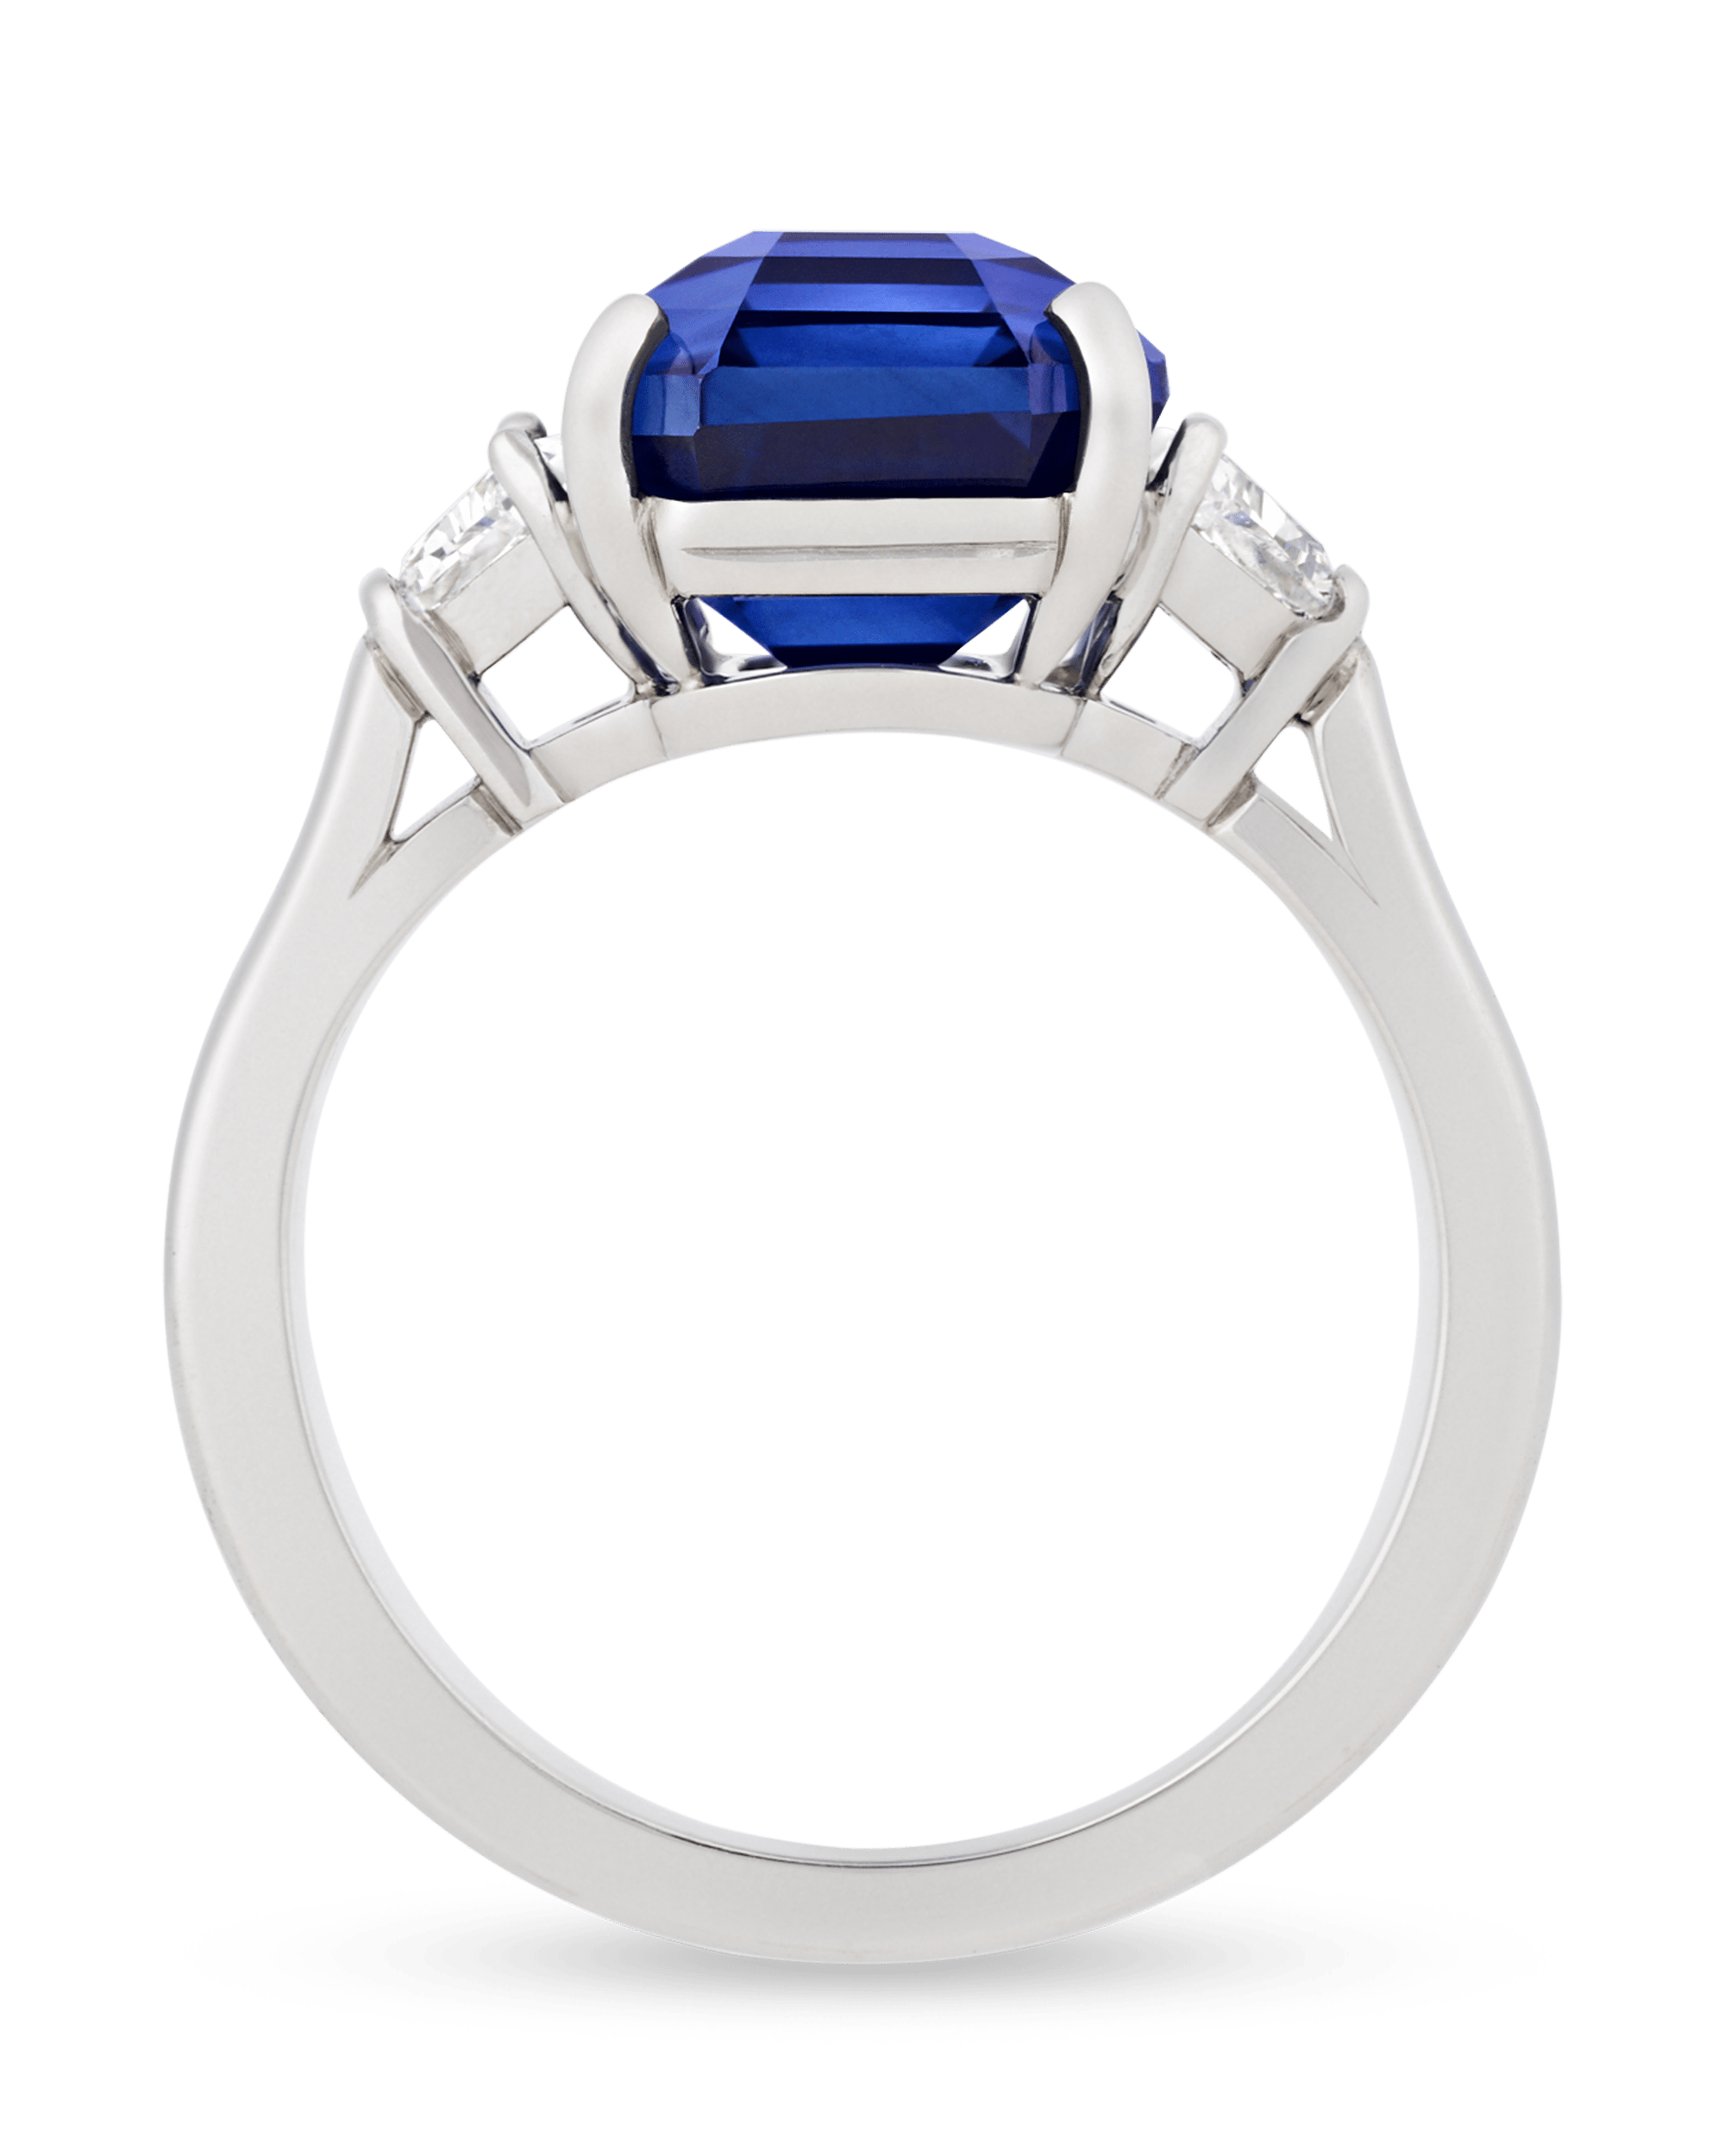 Oscar Heyman Ceylon Sapphire Ring, 7.57 Carats